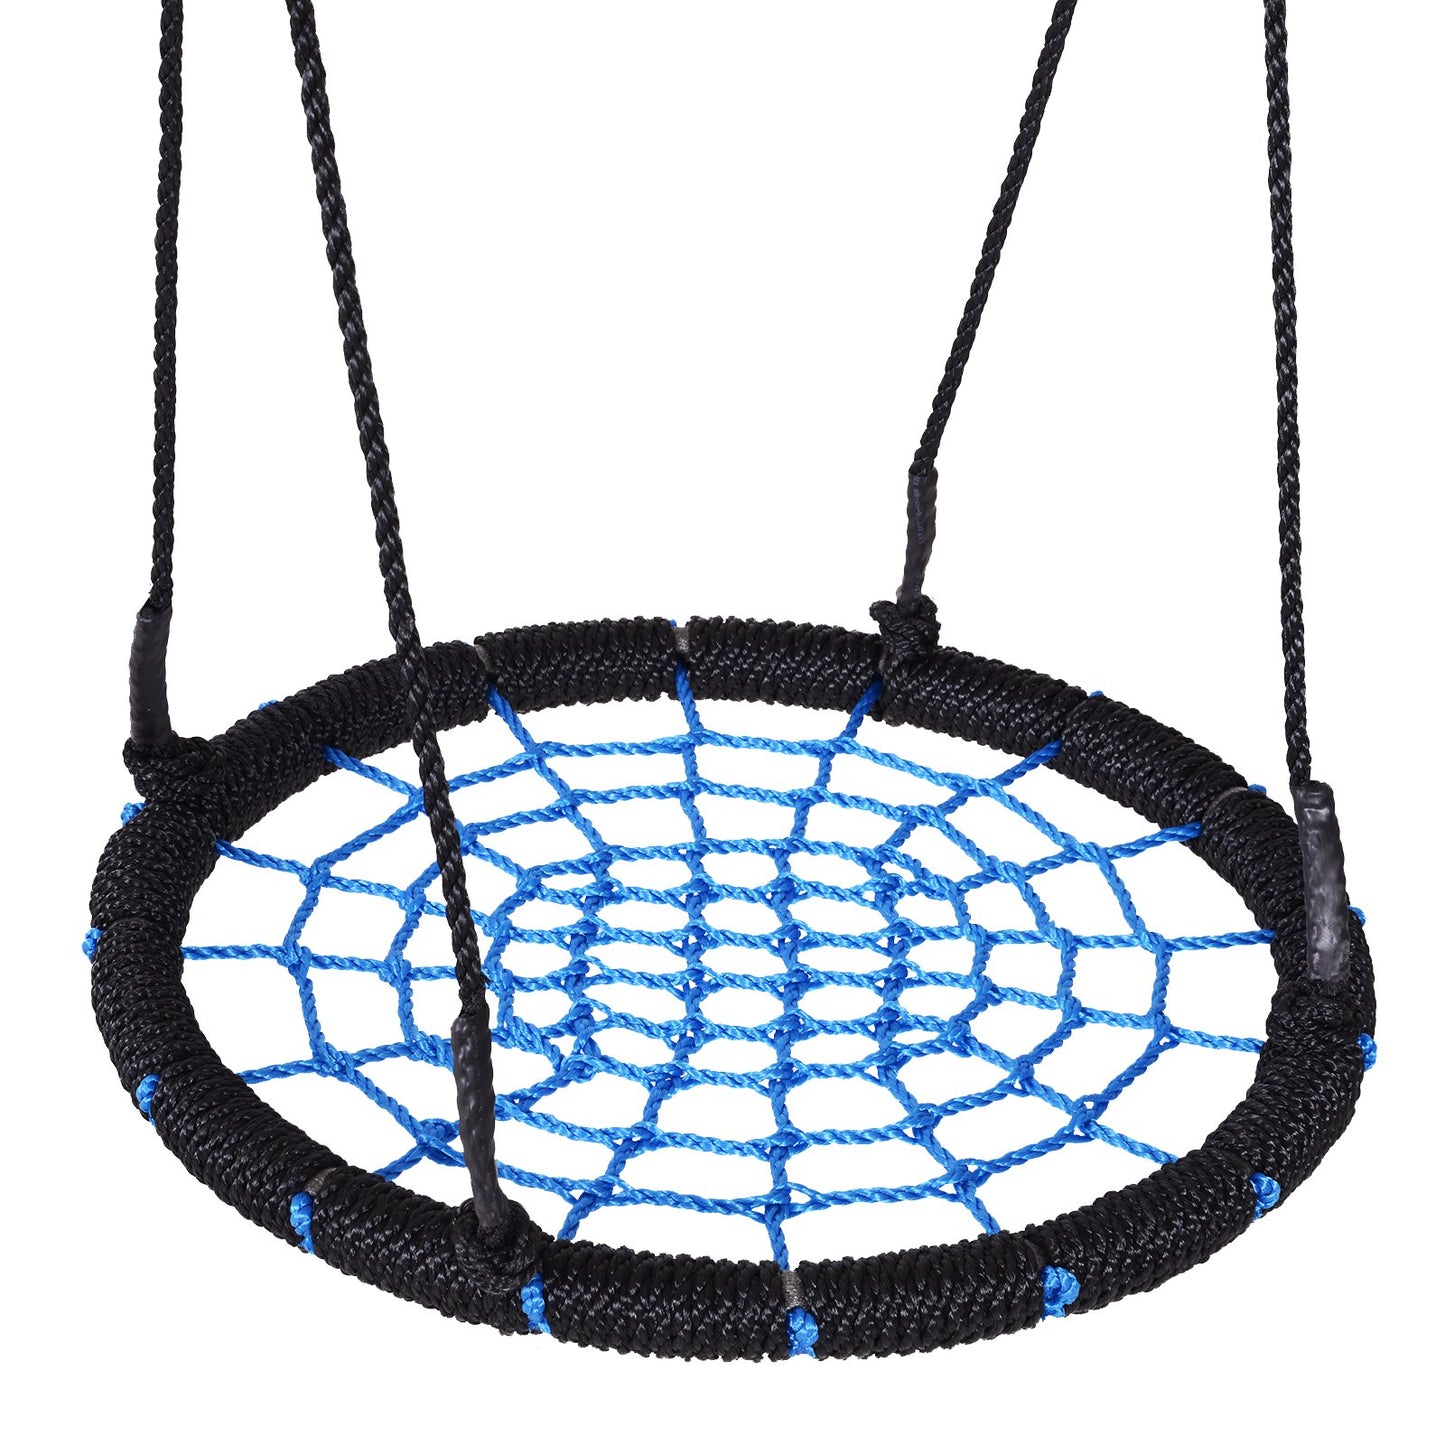 HOMCOM Kids Spider Web Swing,  Φ60x5H cm-Black/Blue